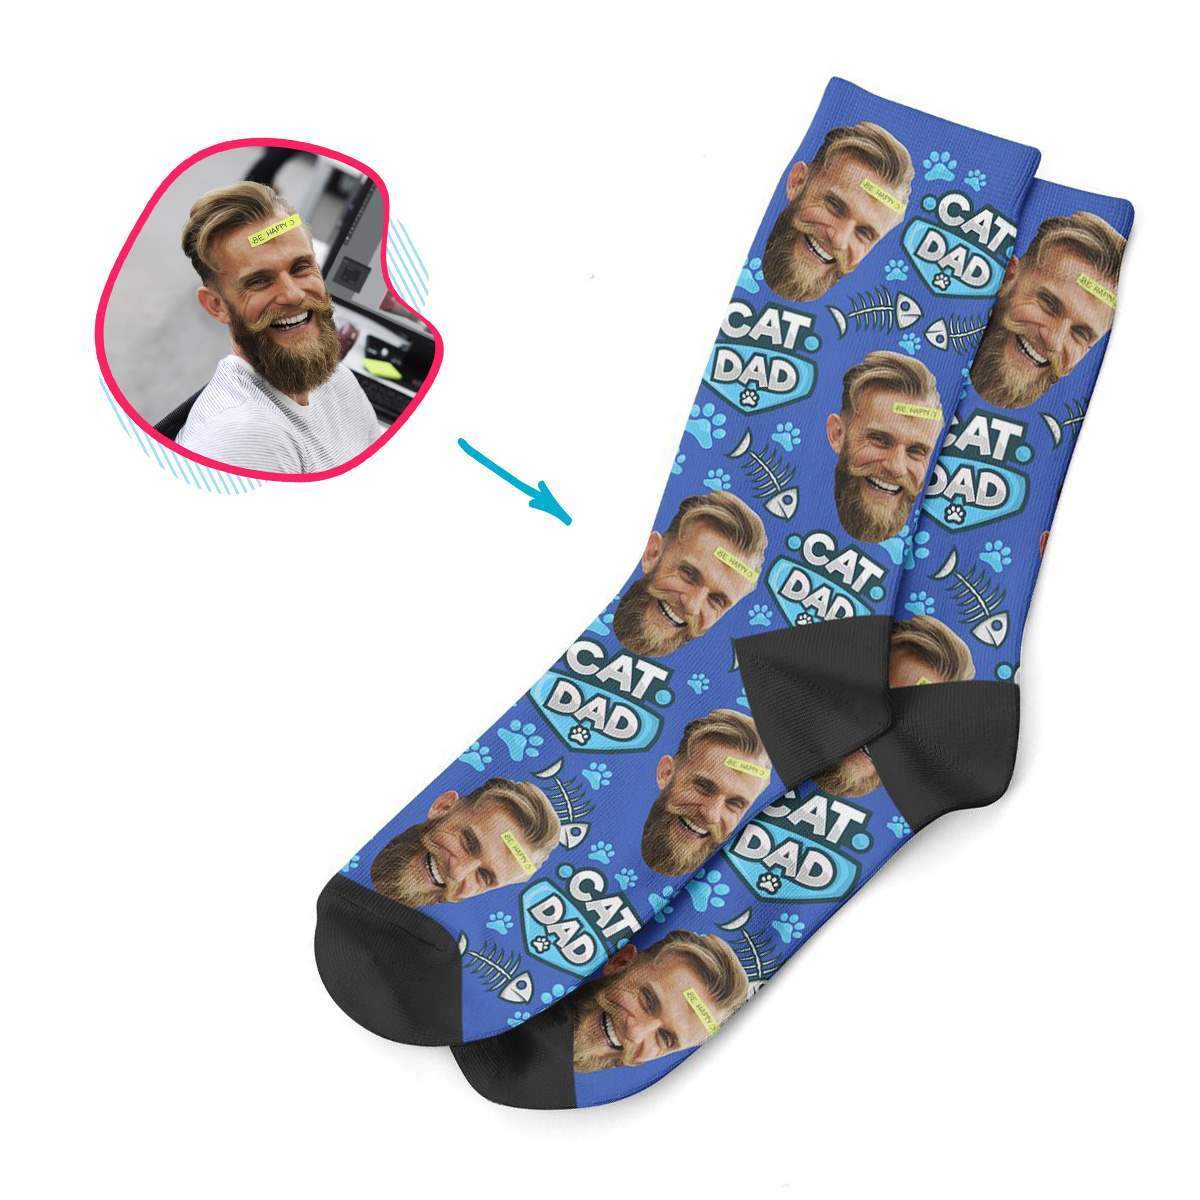 Cat Dad Personalized Socks